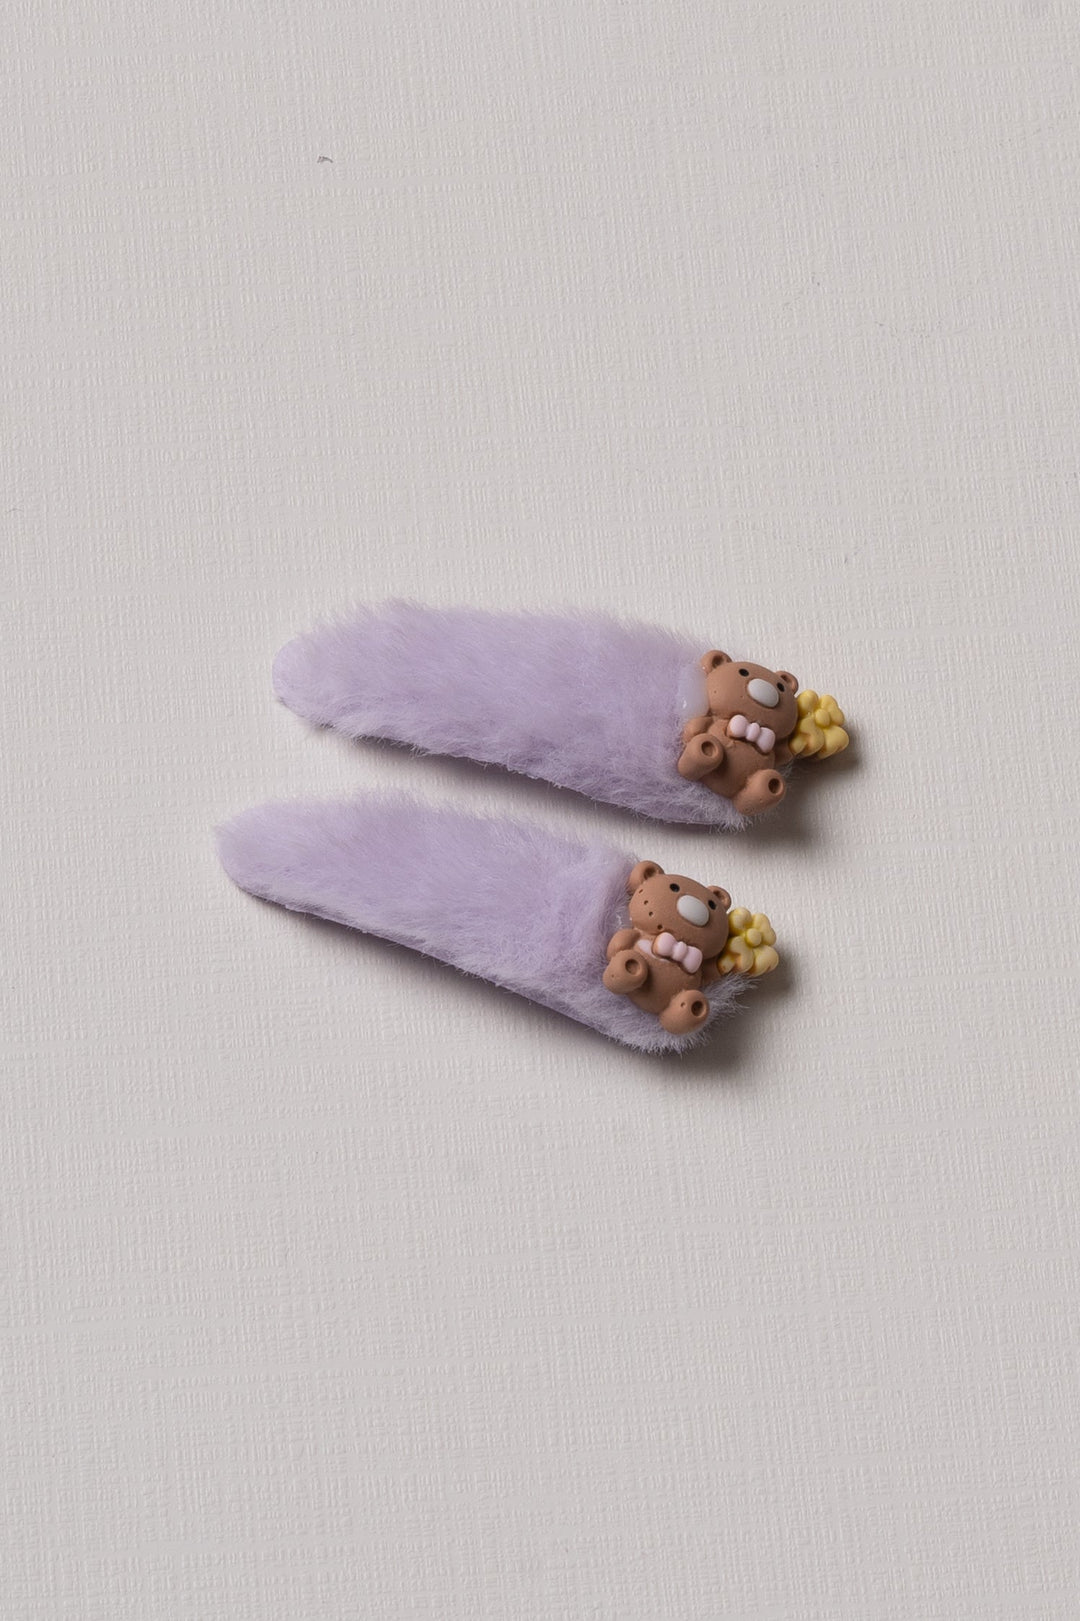 The Nesavu Tick Tac Clip Lavender Dream Fuzzy Tick Tac Clips Nesavu Purple / Style 4 JHTT16D Children's Lavender Fuzzy Animal Tick Tac Clips | Soft Hair Accessories | The Nesavu